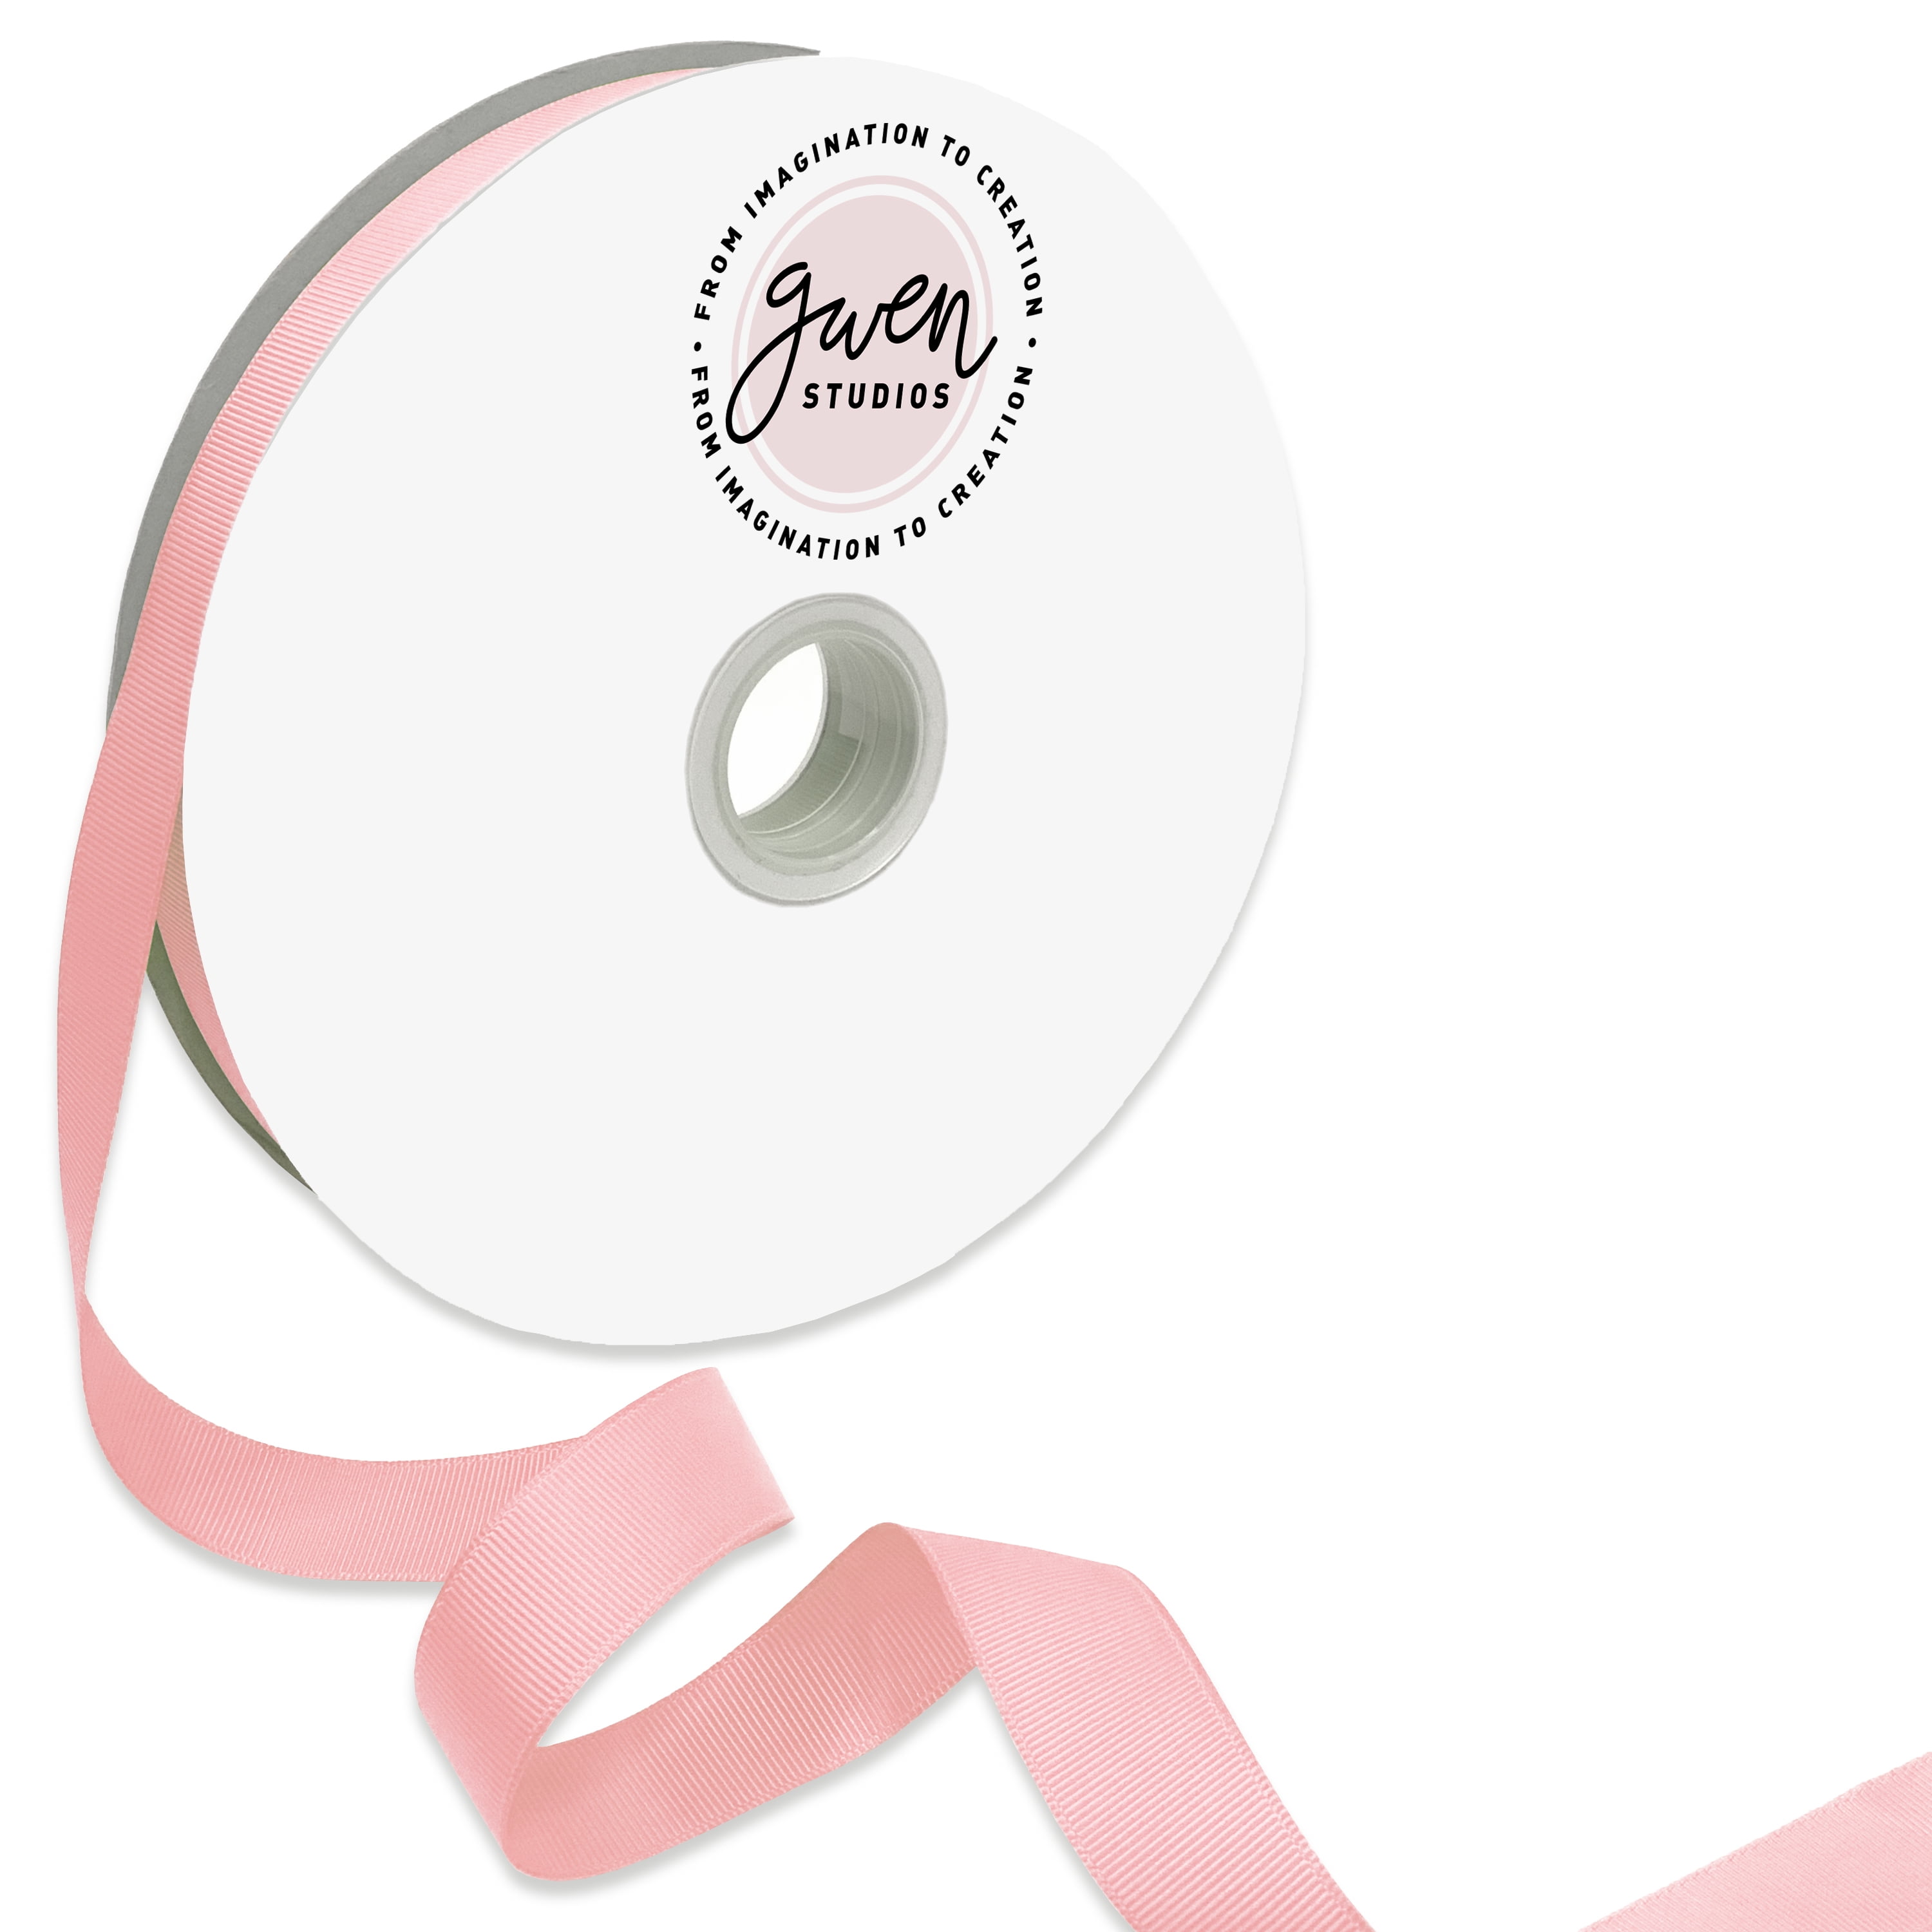 Striped Grosgrain Ribbon - Pink, Green & White - 3/8 inch - 1 Yard – Sugar  Pink Boutique